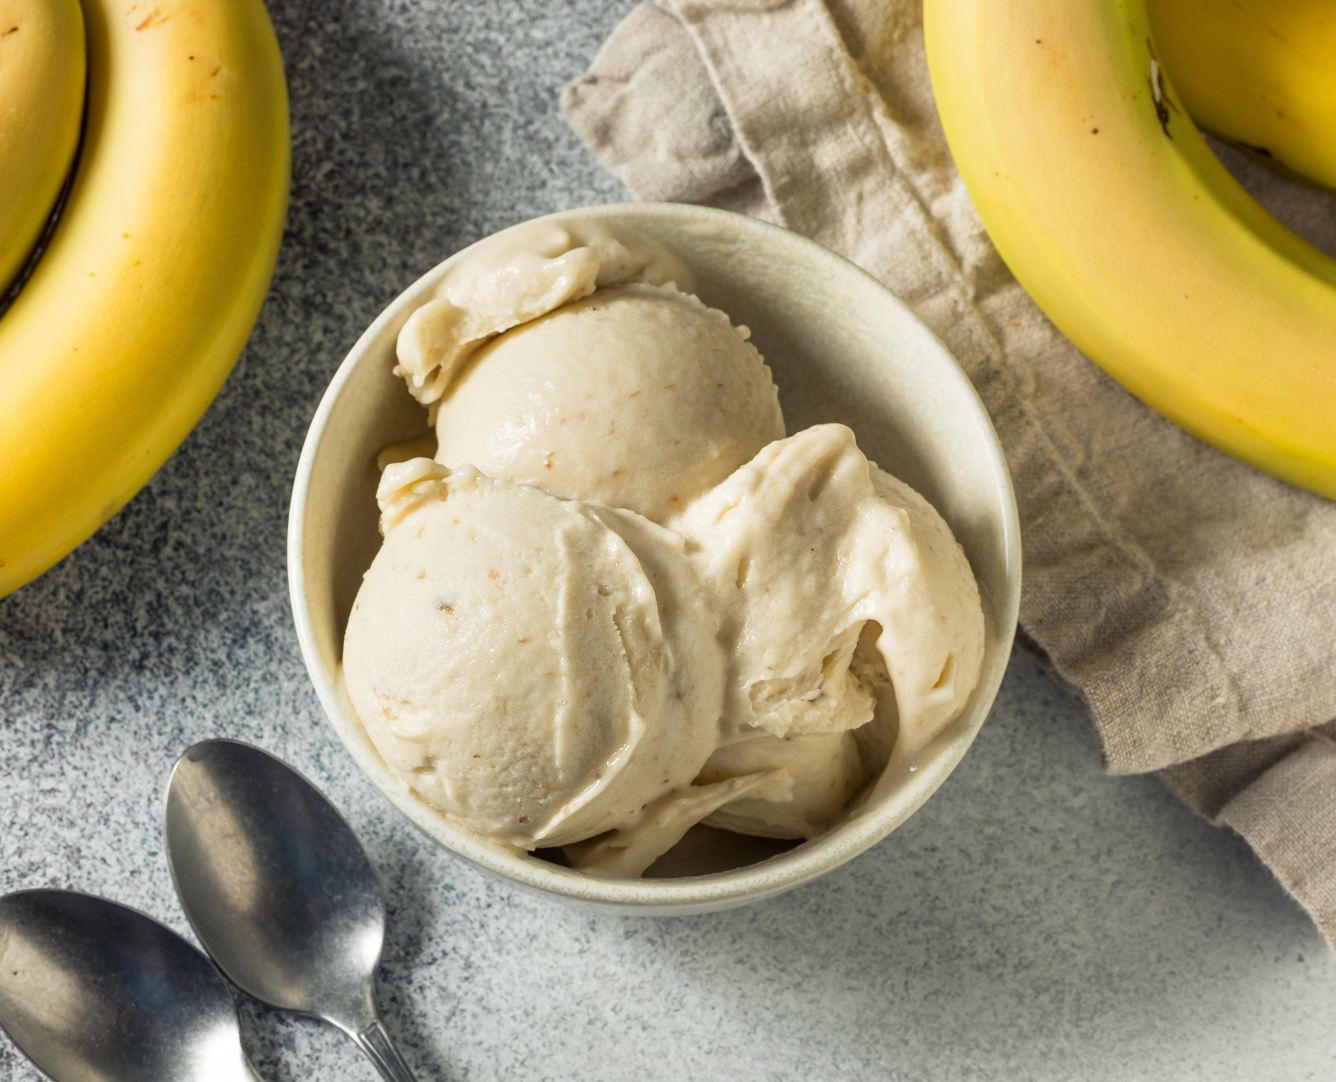 Banana ice cream bowl